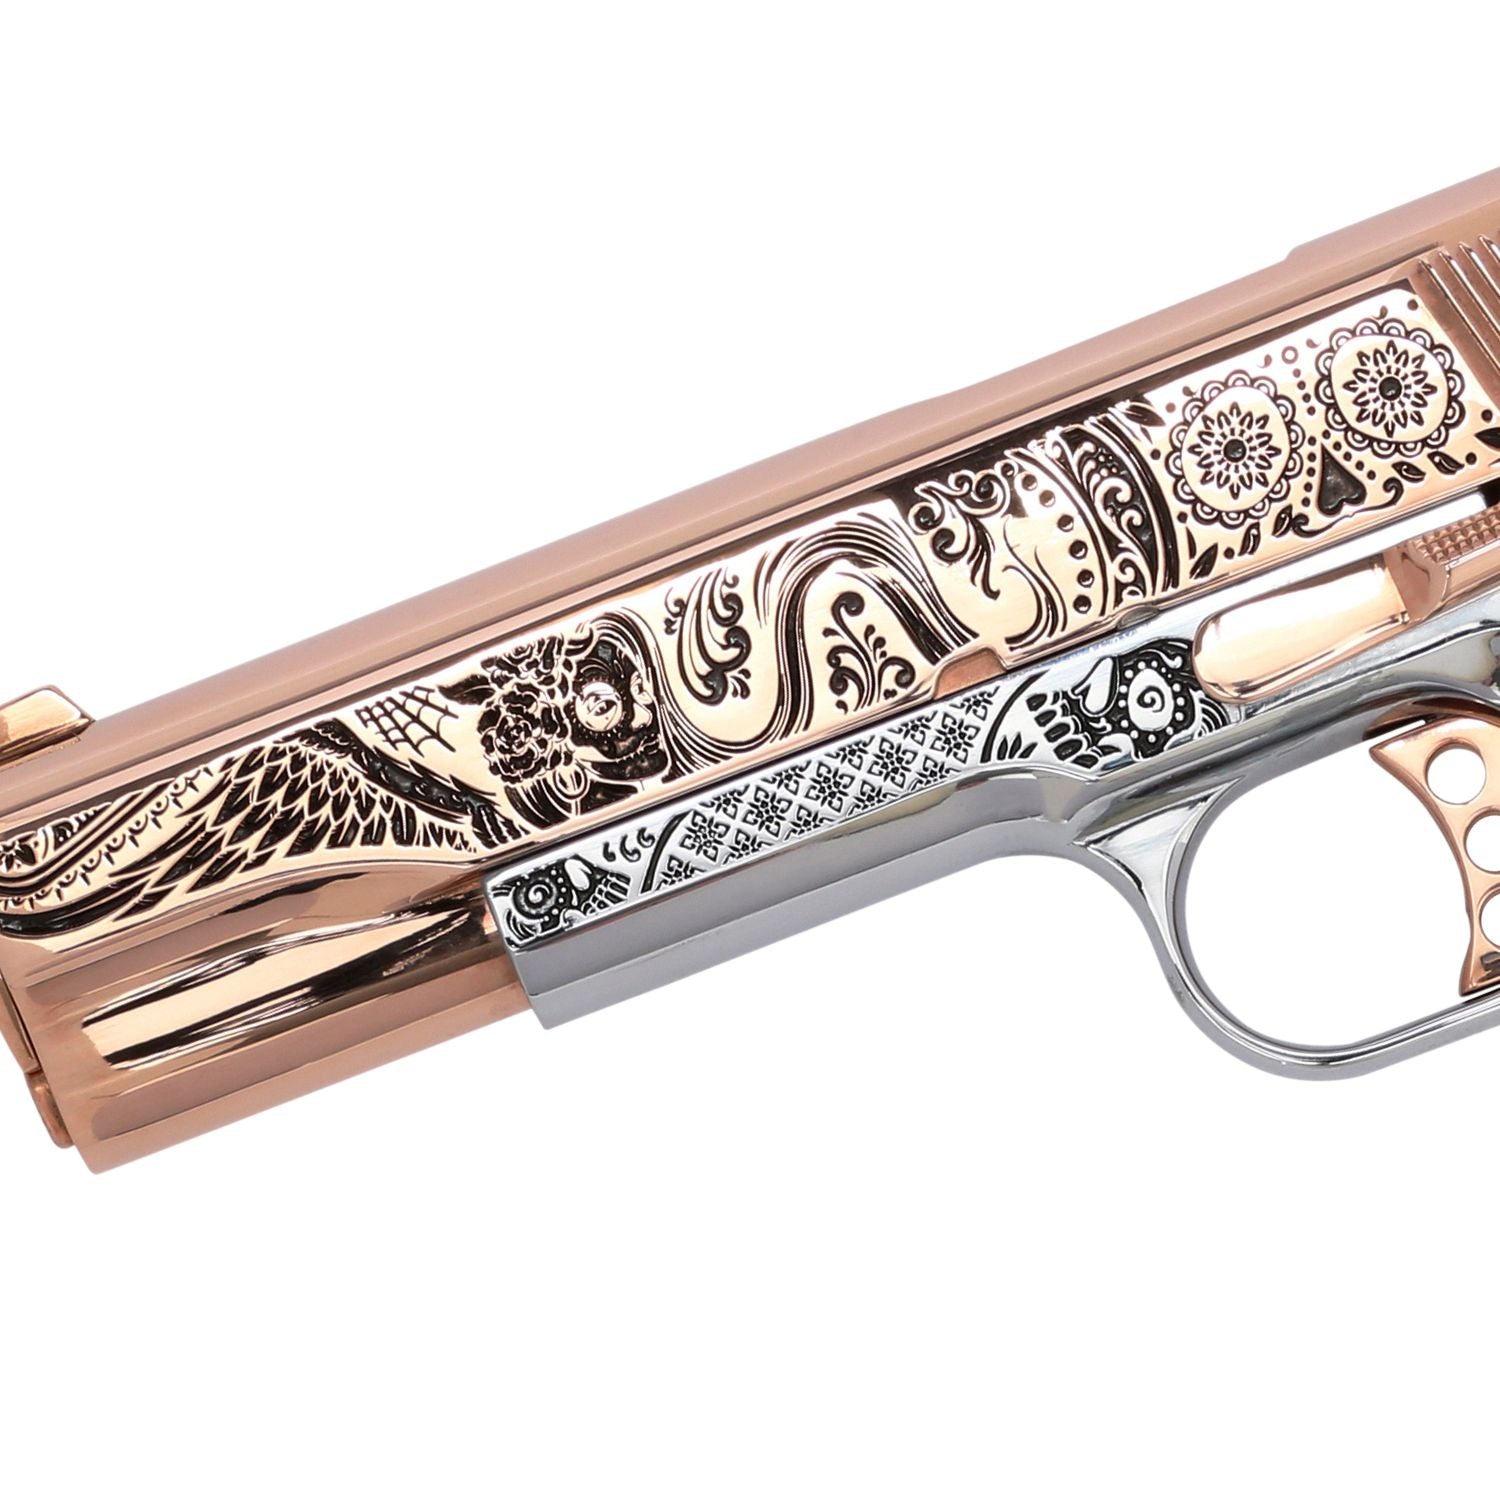 Springfield 1911 Garrison .45 ACP Catrina 18 karat Rose Gold Pistol, SKU: 6966564749414, 18 karat  Rose gold gun, 18 Karat Gold Firearm